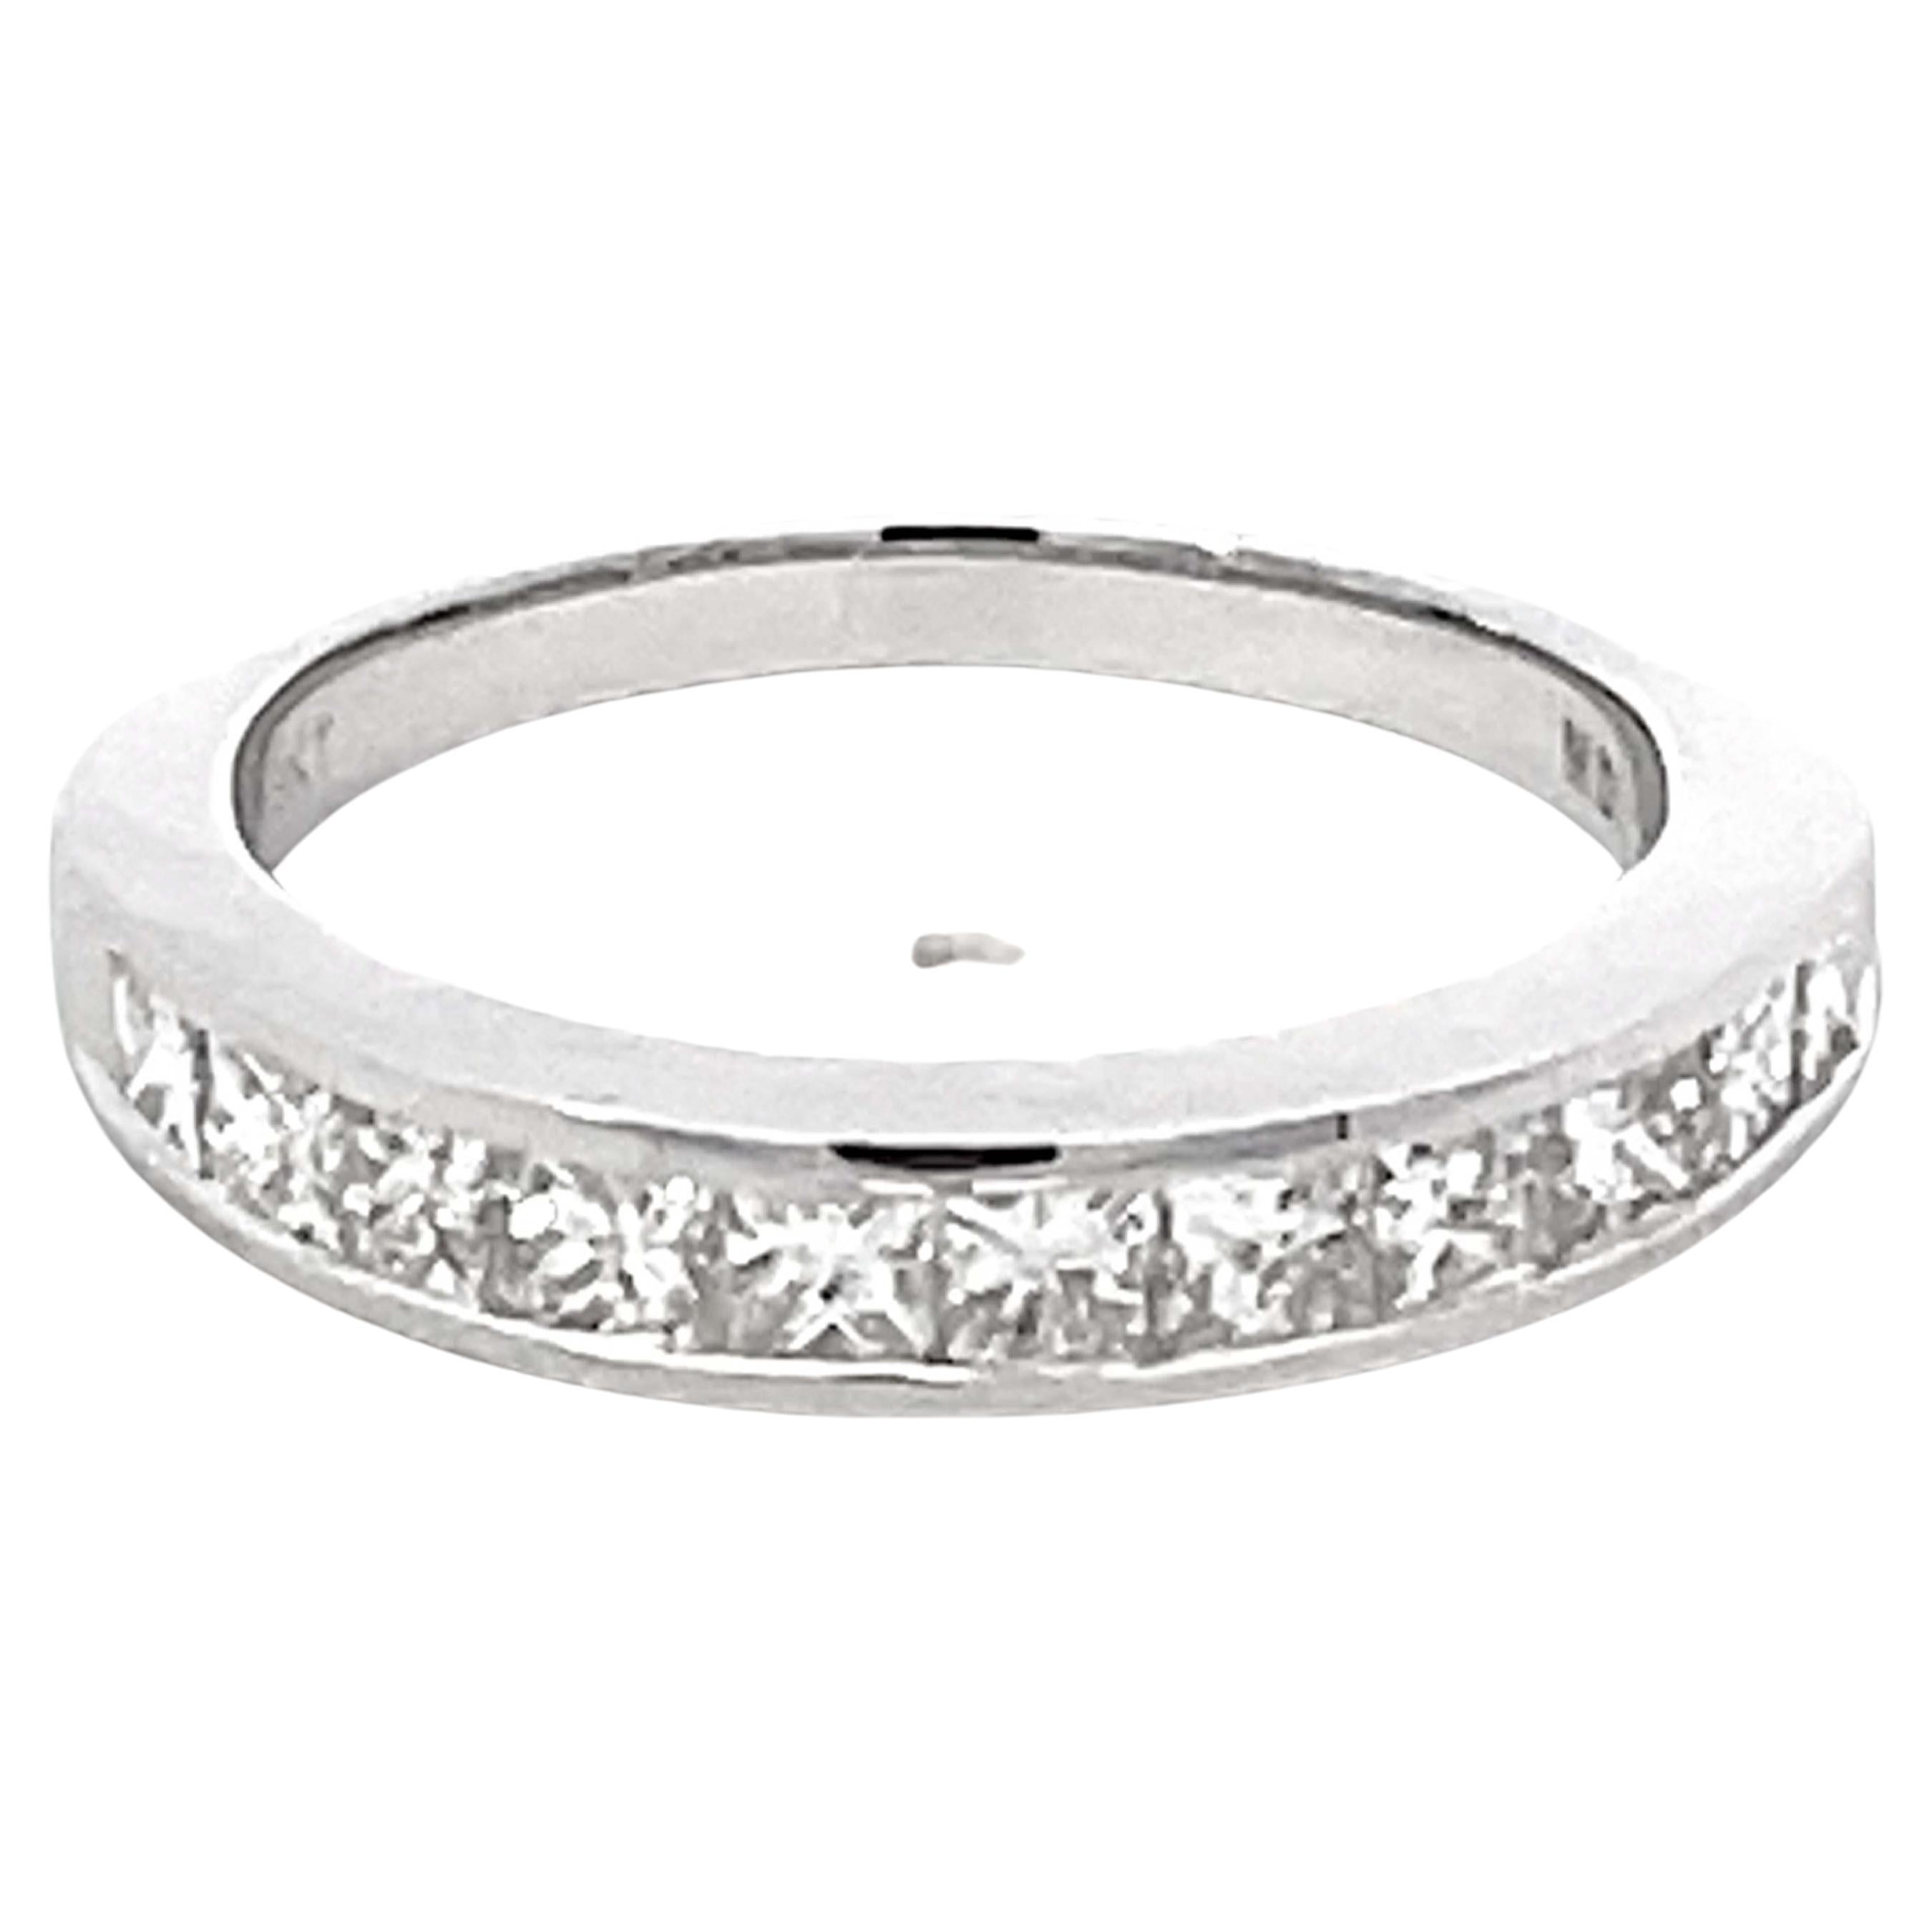 1.07 Carat Princess Cut Channel Set Diamond Band Ring Solid 18k White Gold